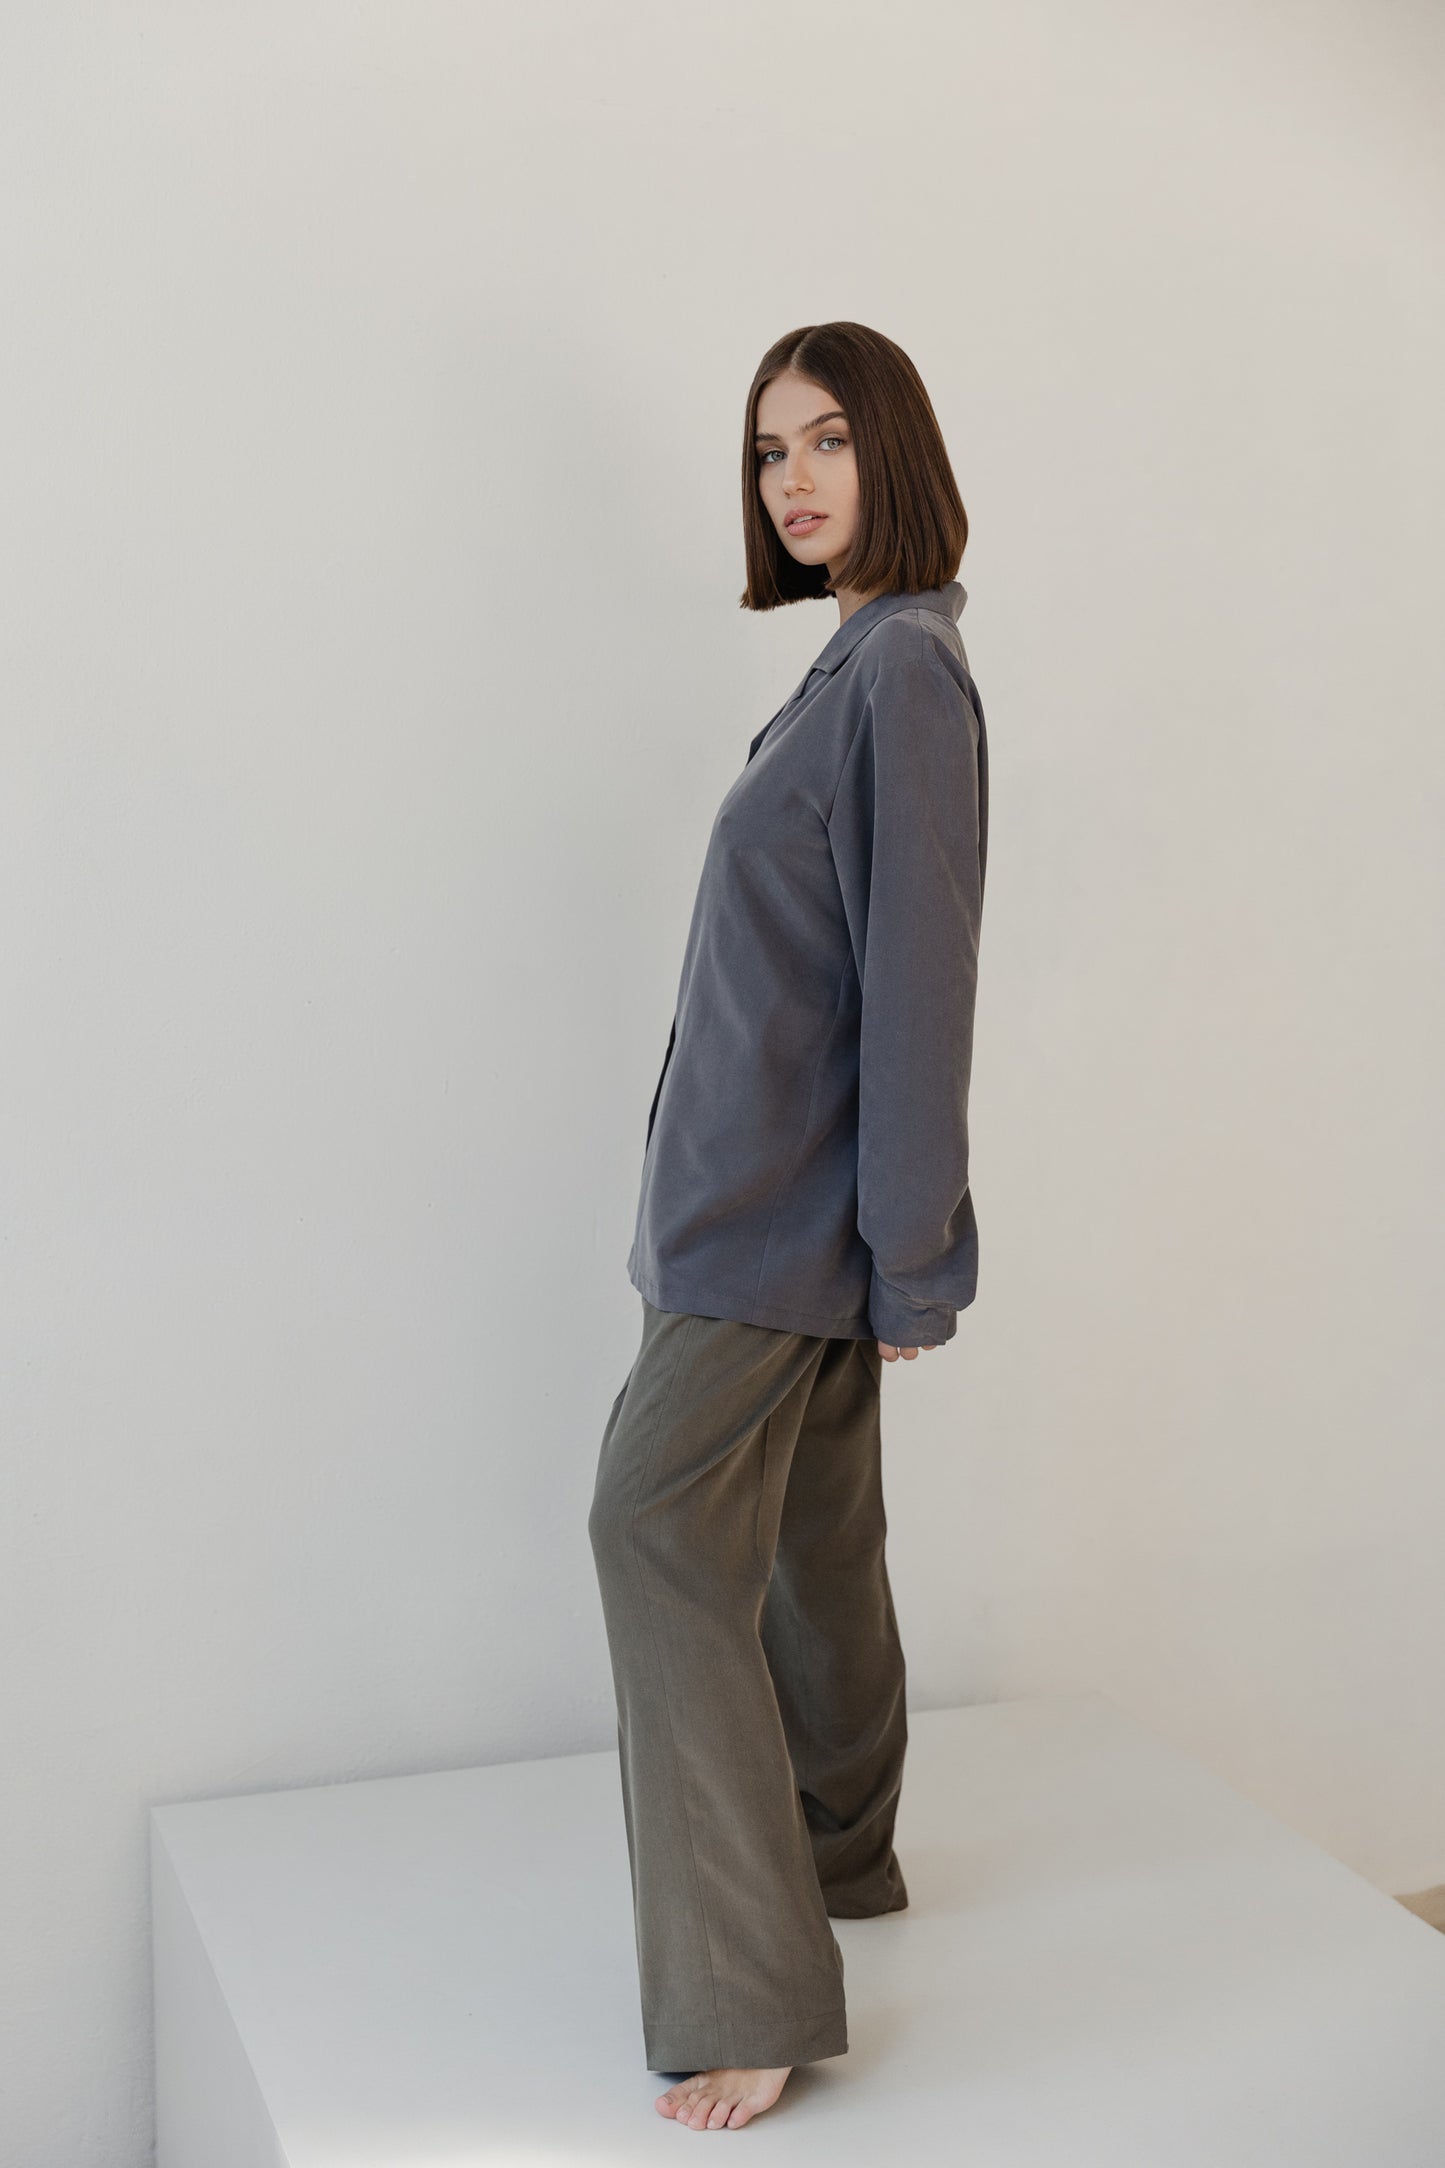 Women's long-sleeved gray shirt